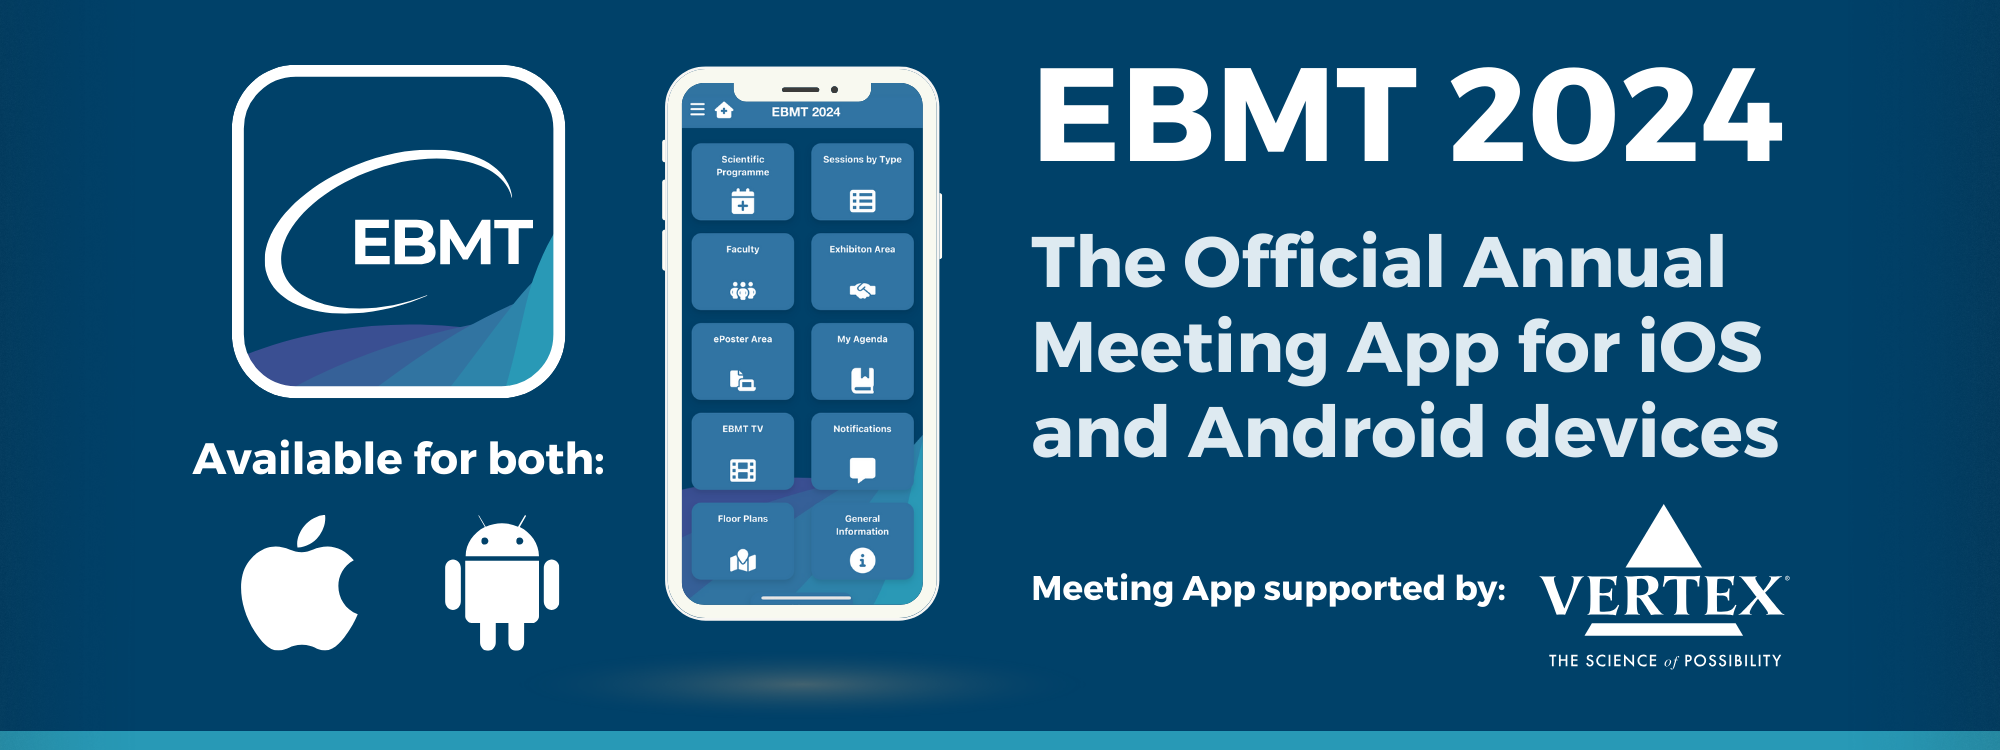 EBMT 2024 App